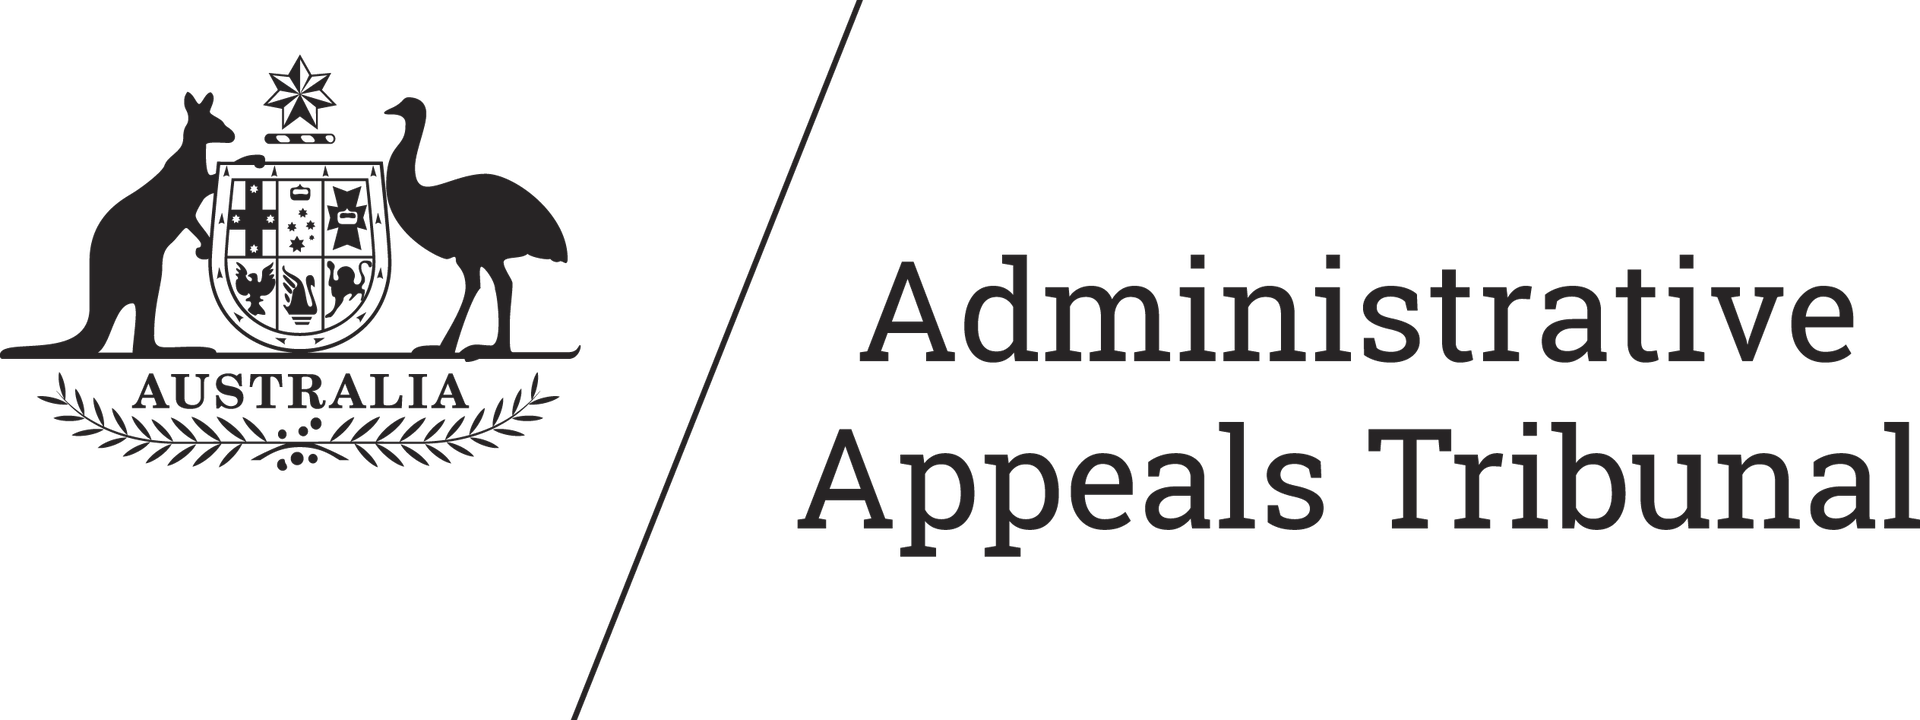 Administrative Appeals Tribunal